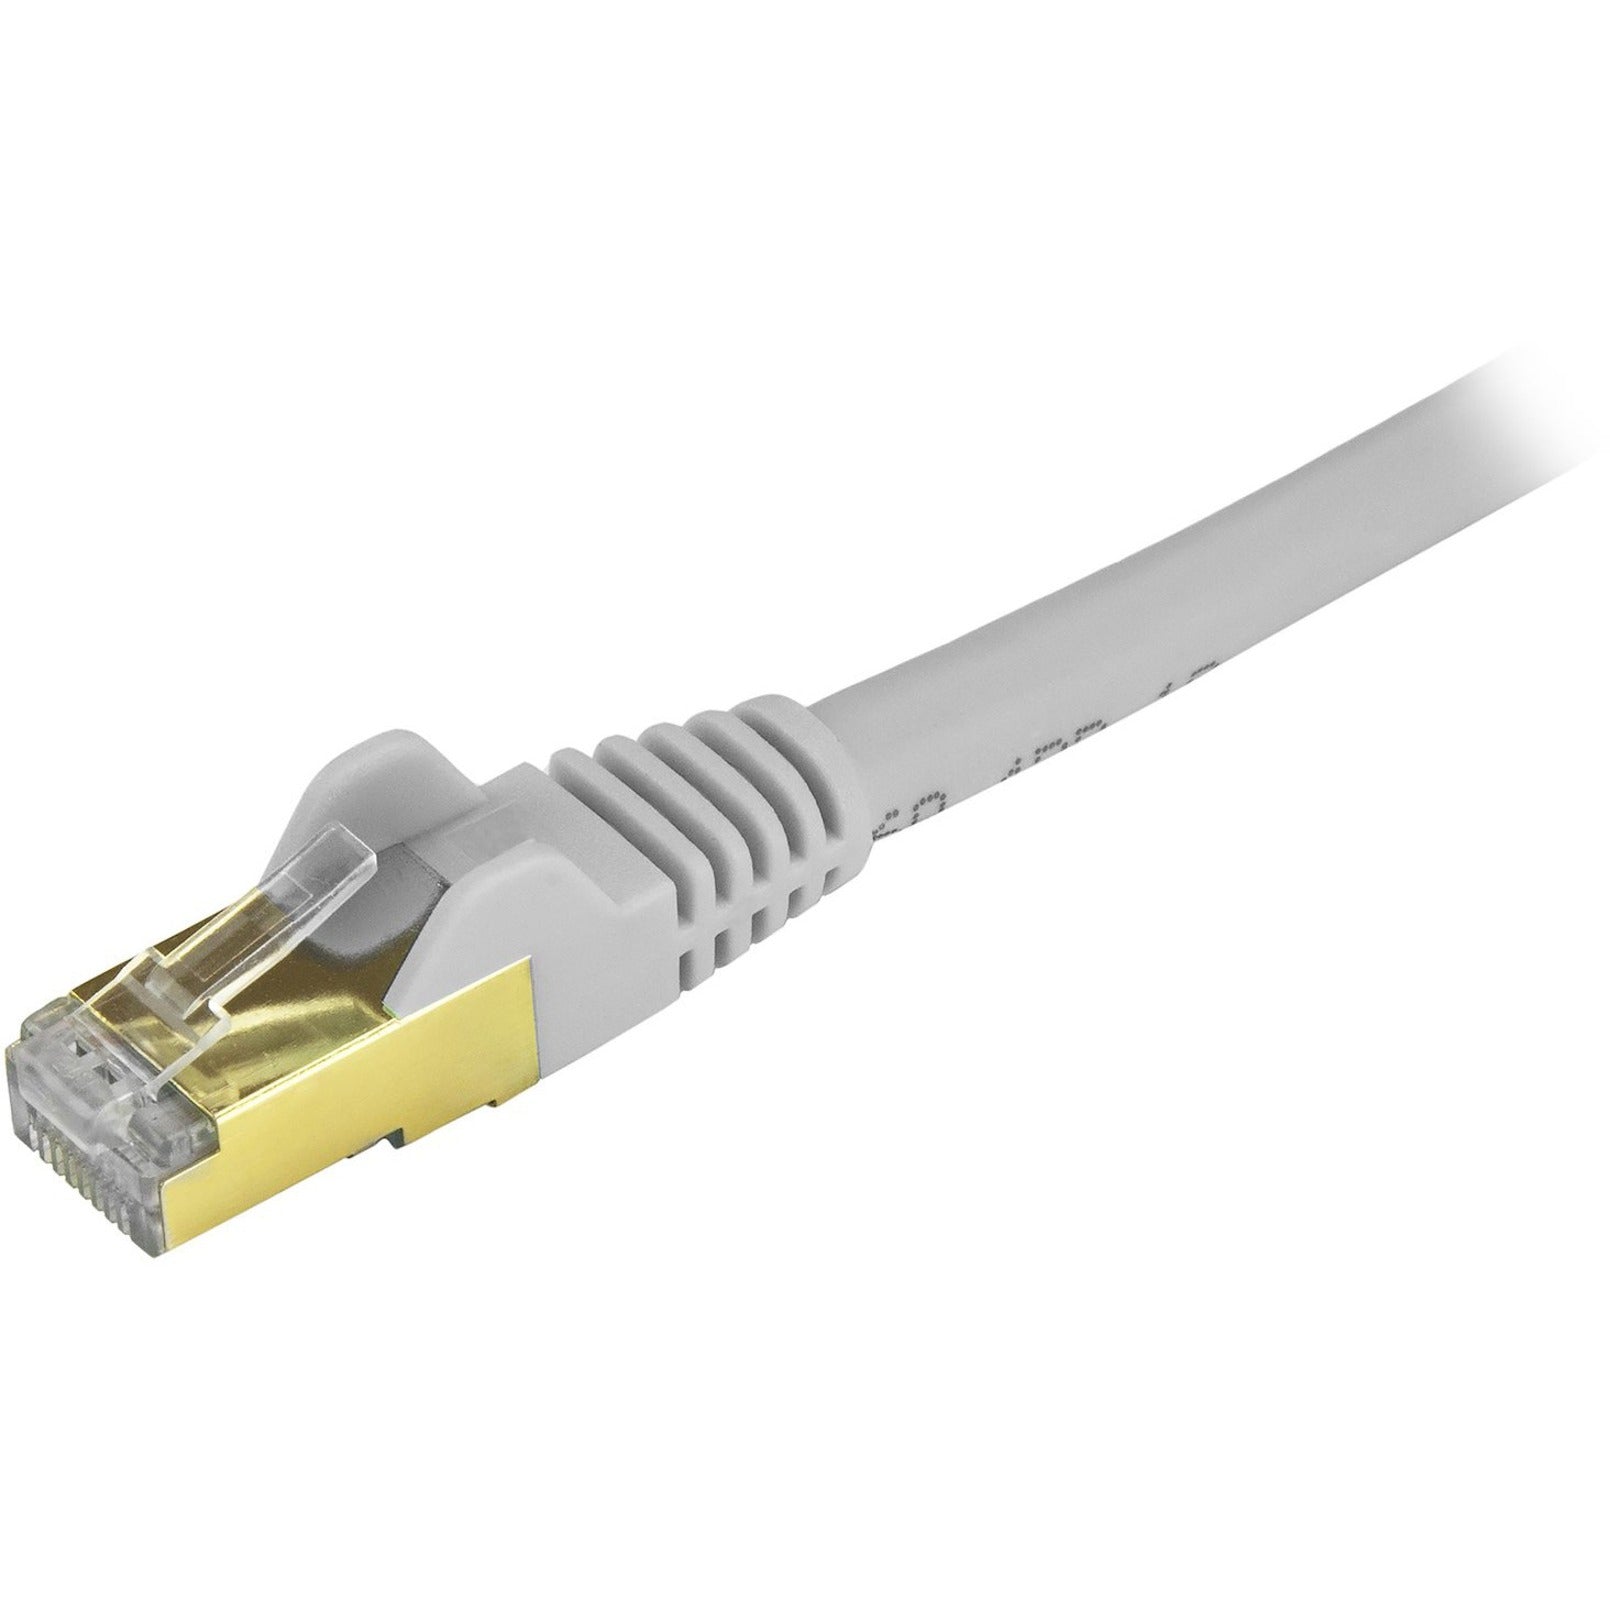 StarTech.com C6ASPAT9GR Cat6a Ethernet cavo patch - Schermato (STP) - 9 ft. Grigio Snagless RJ45 cavo Ethernet